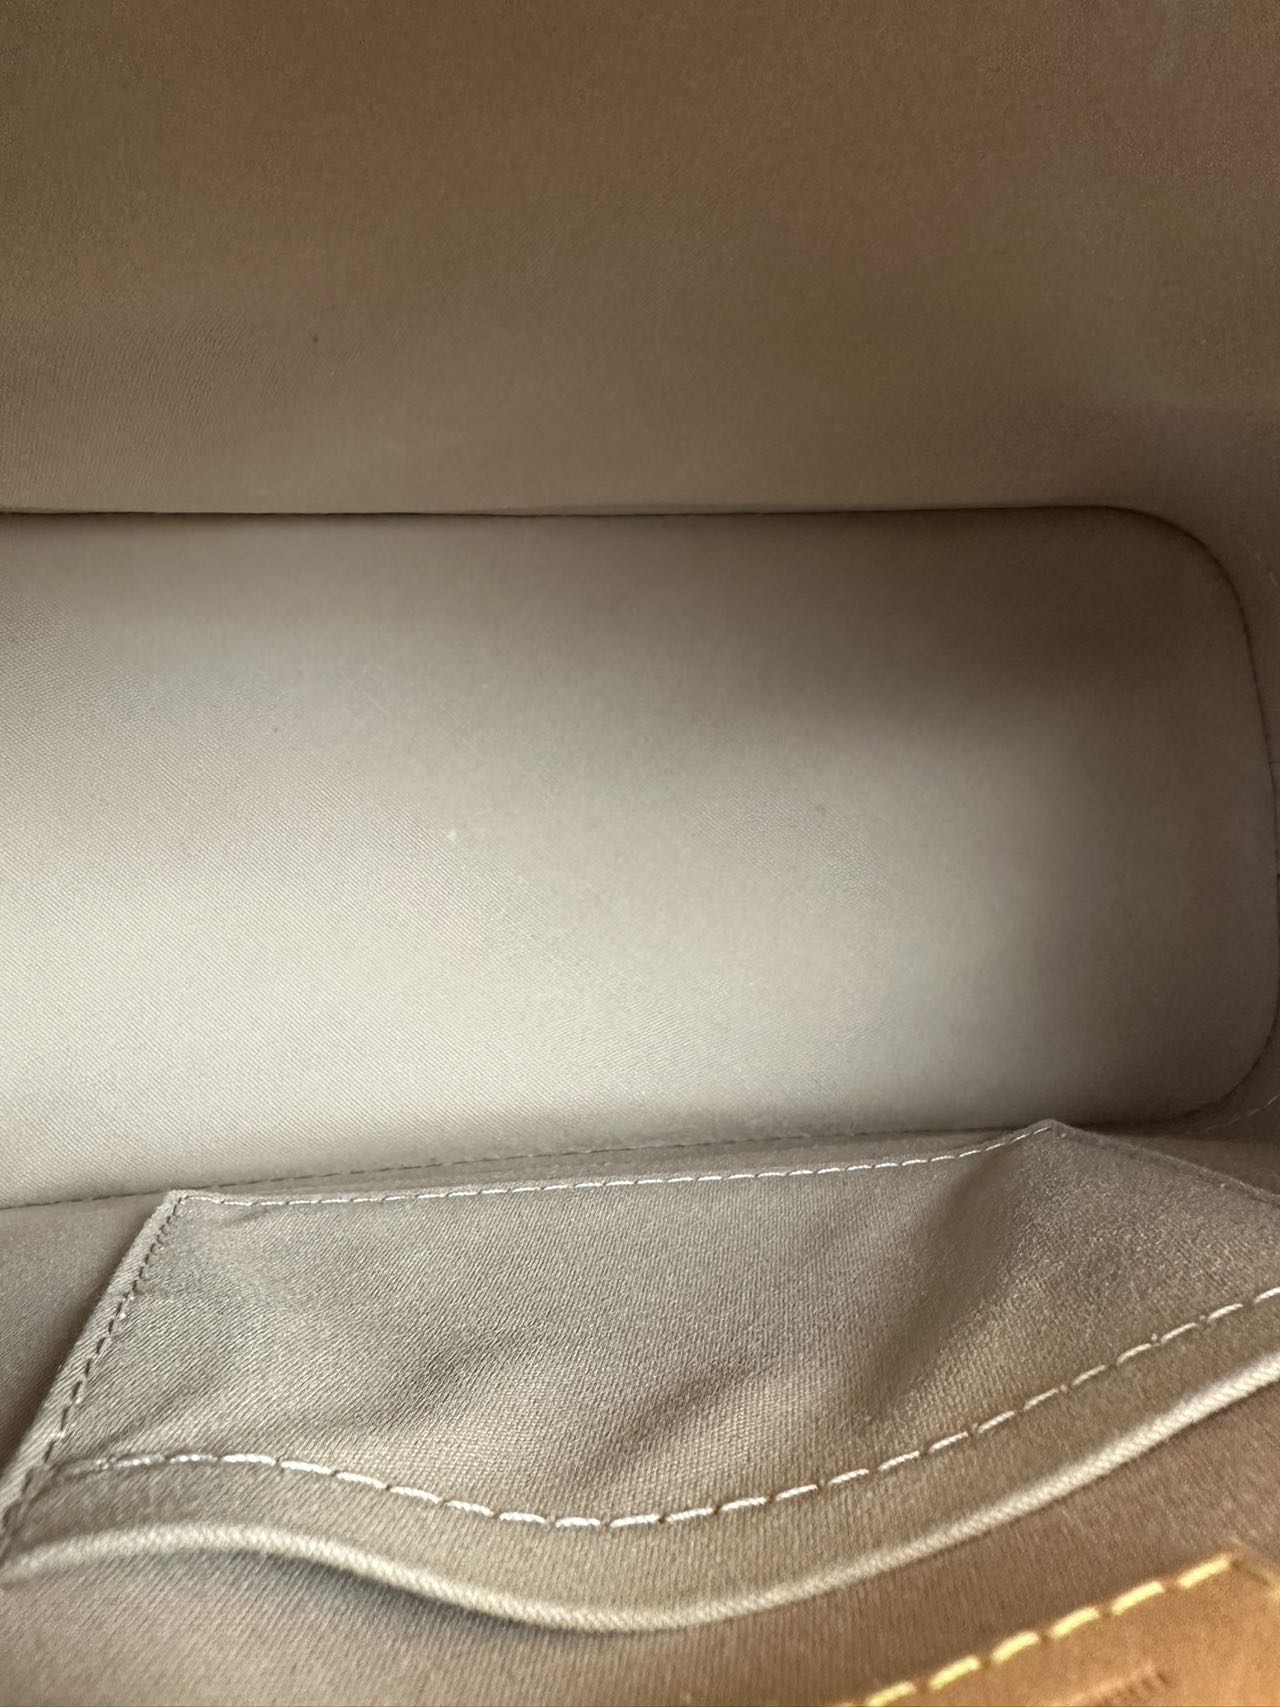 Preloved Louis Vuitton Patent Leather Alma BB Shoulder Bag Crossbody